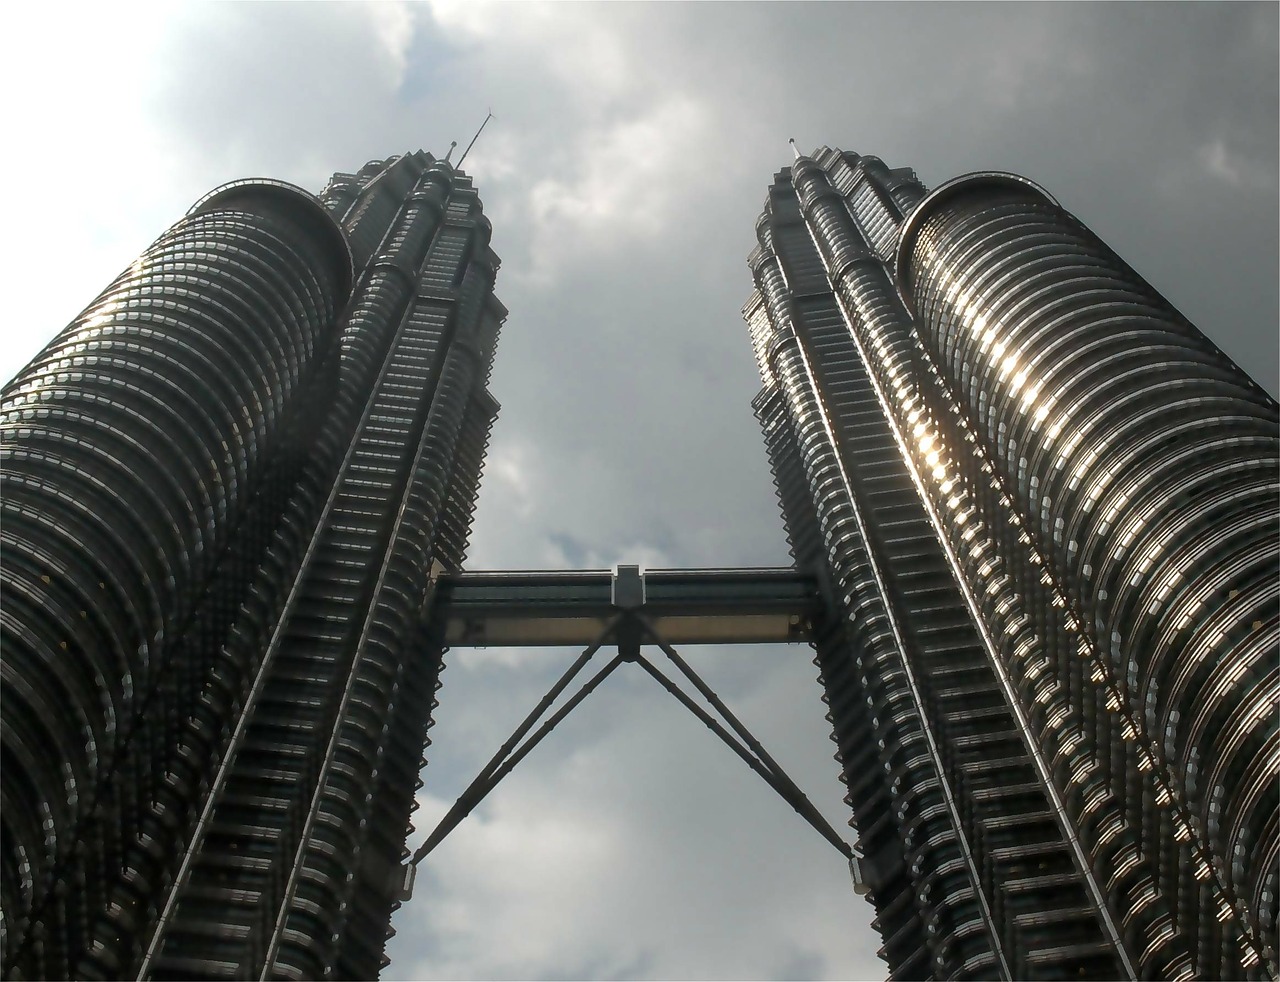 kl malaysia towers free photo